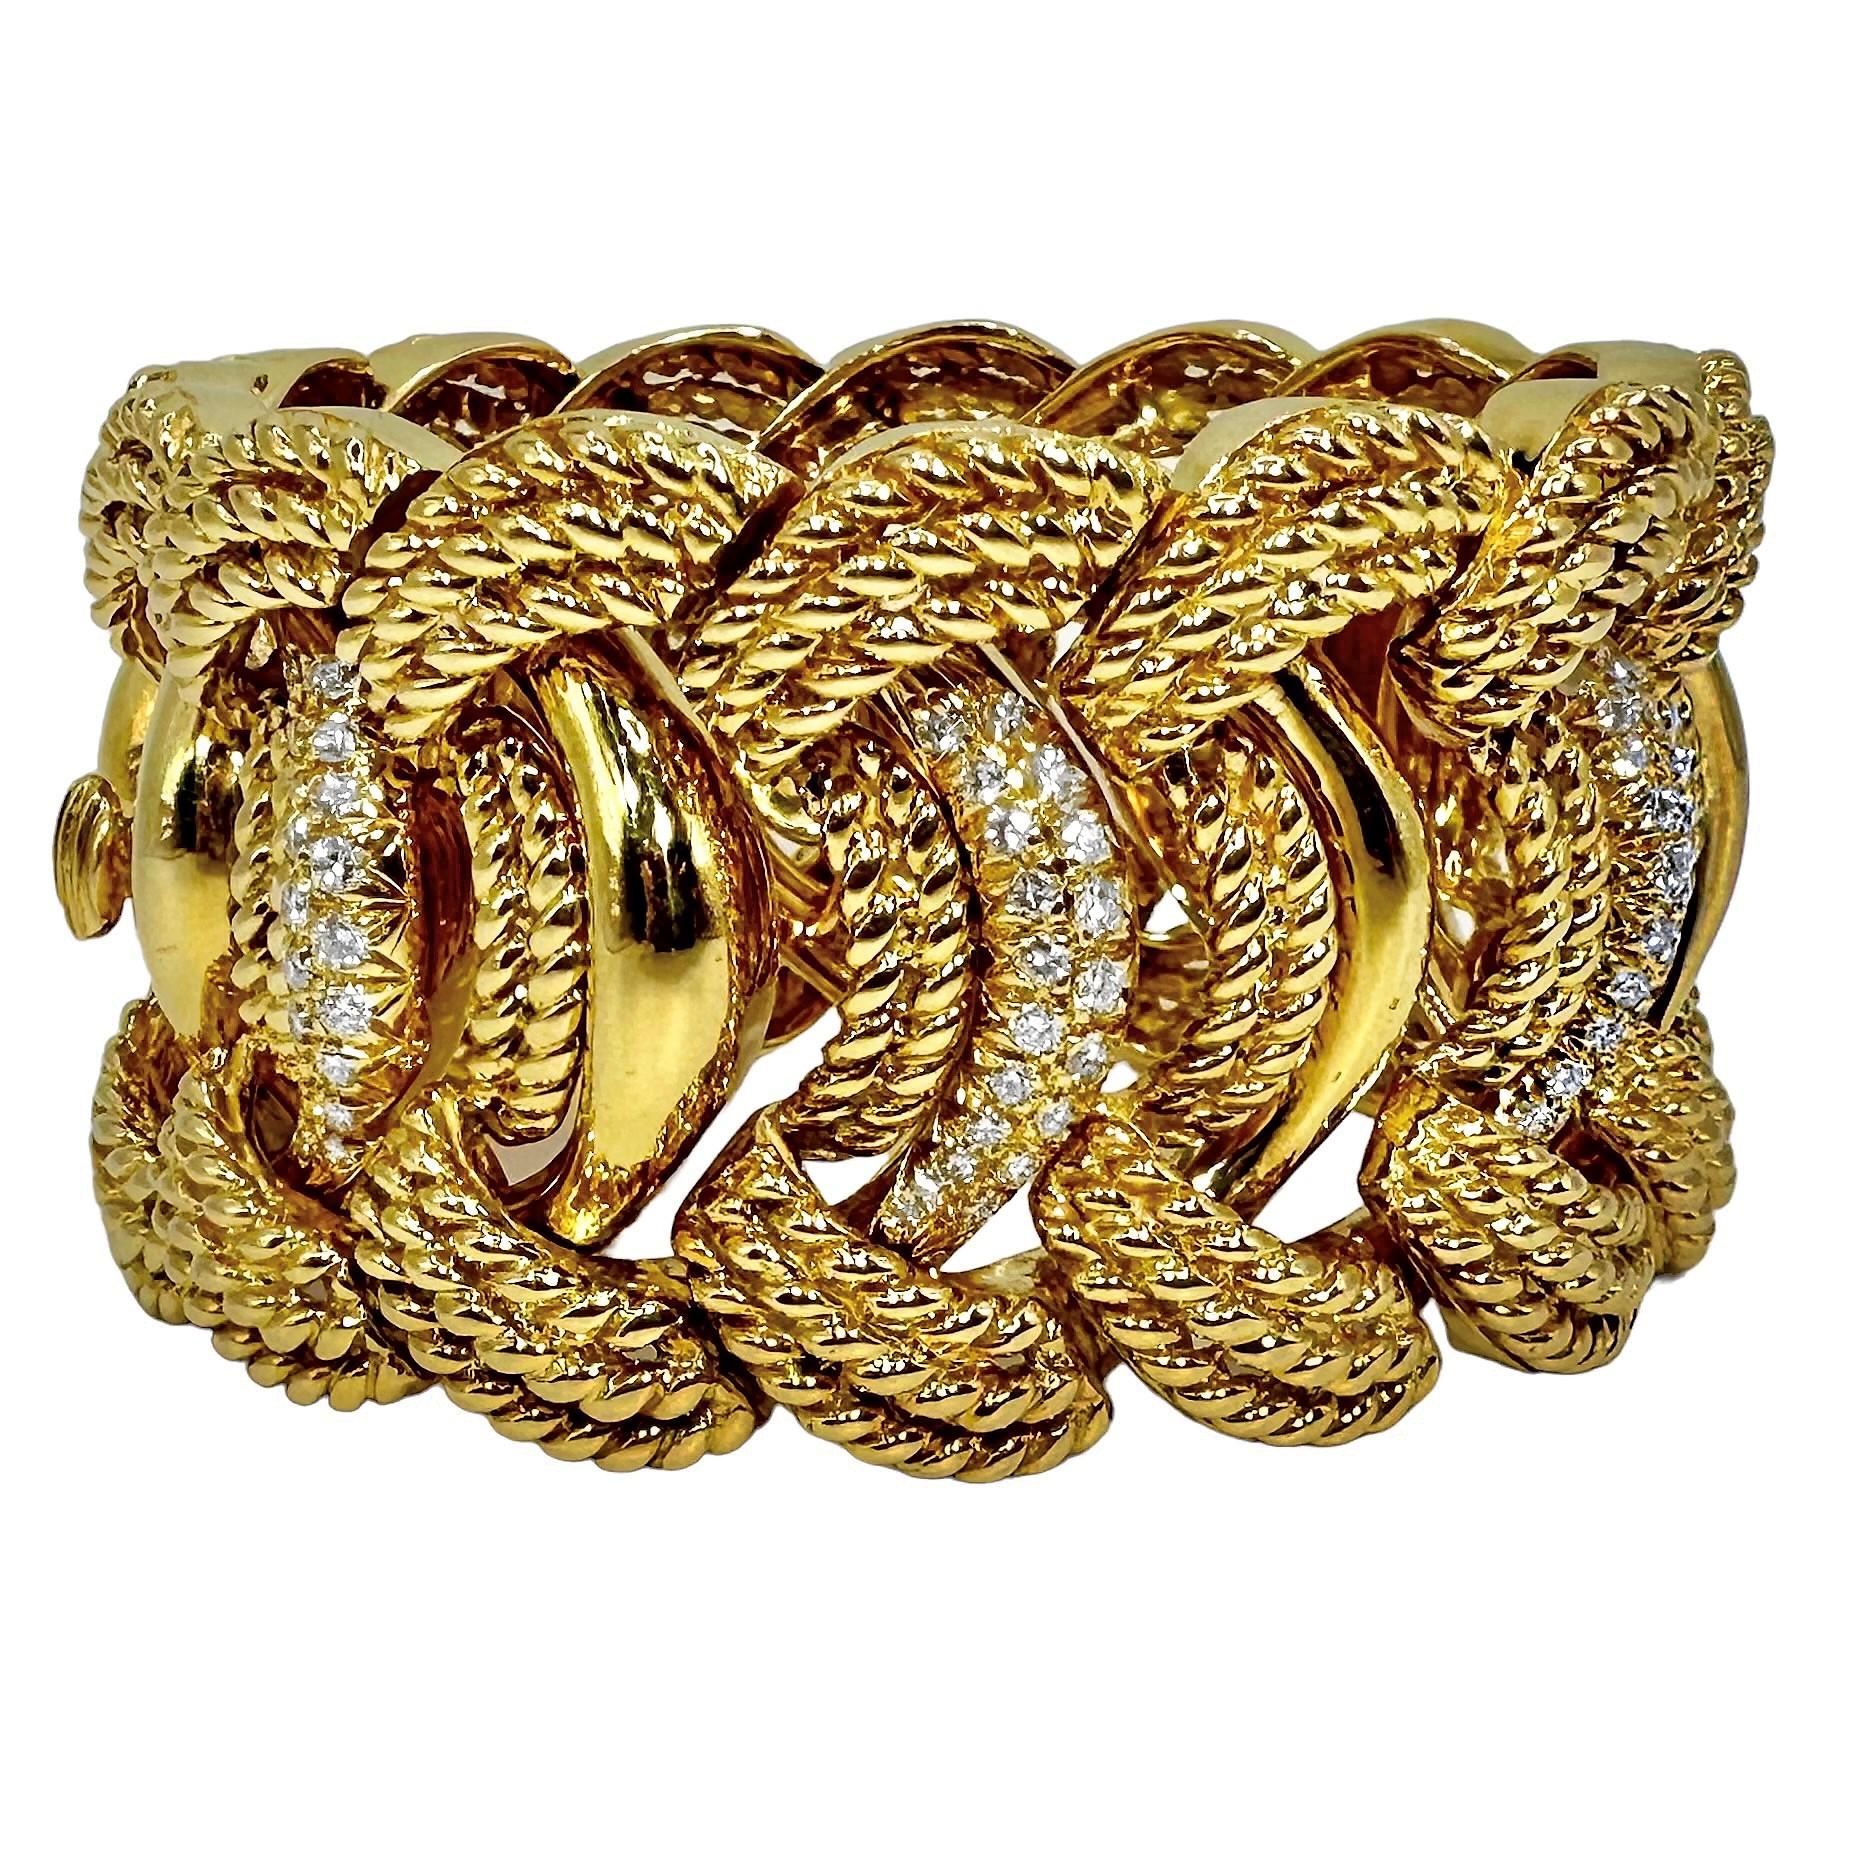 Modern Magnificent Wide Mid-Century Italian 18K Yellow Gold & Diamond Cocktail Bracelet